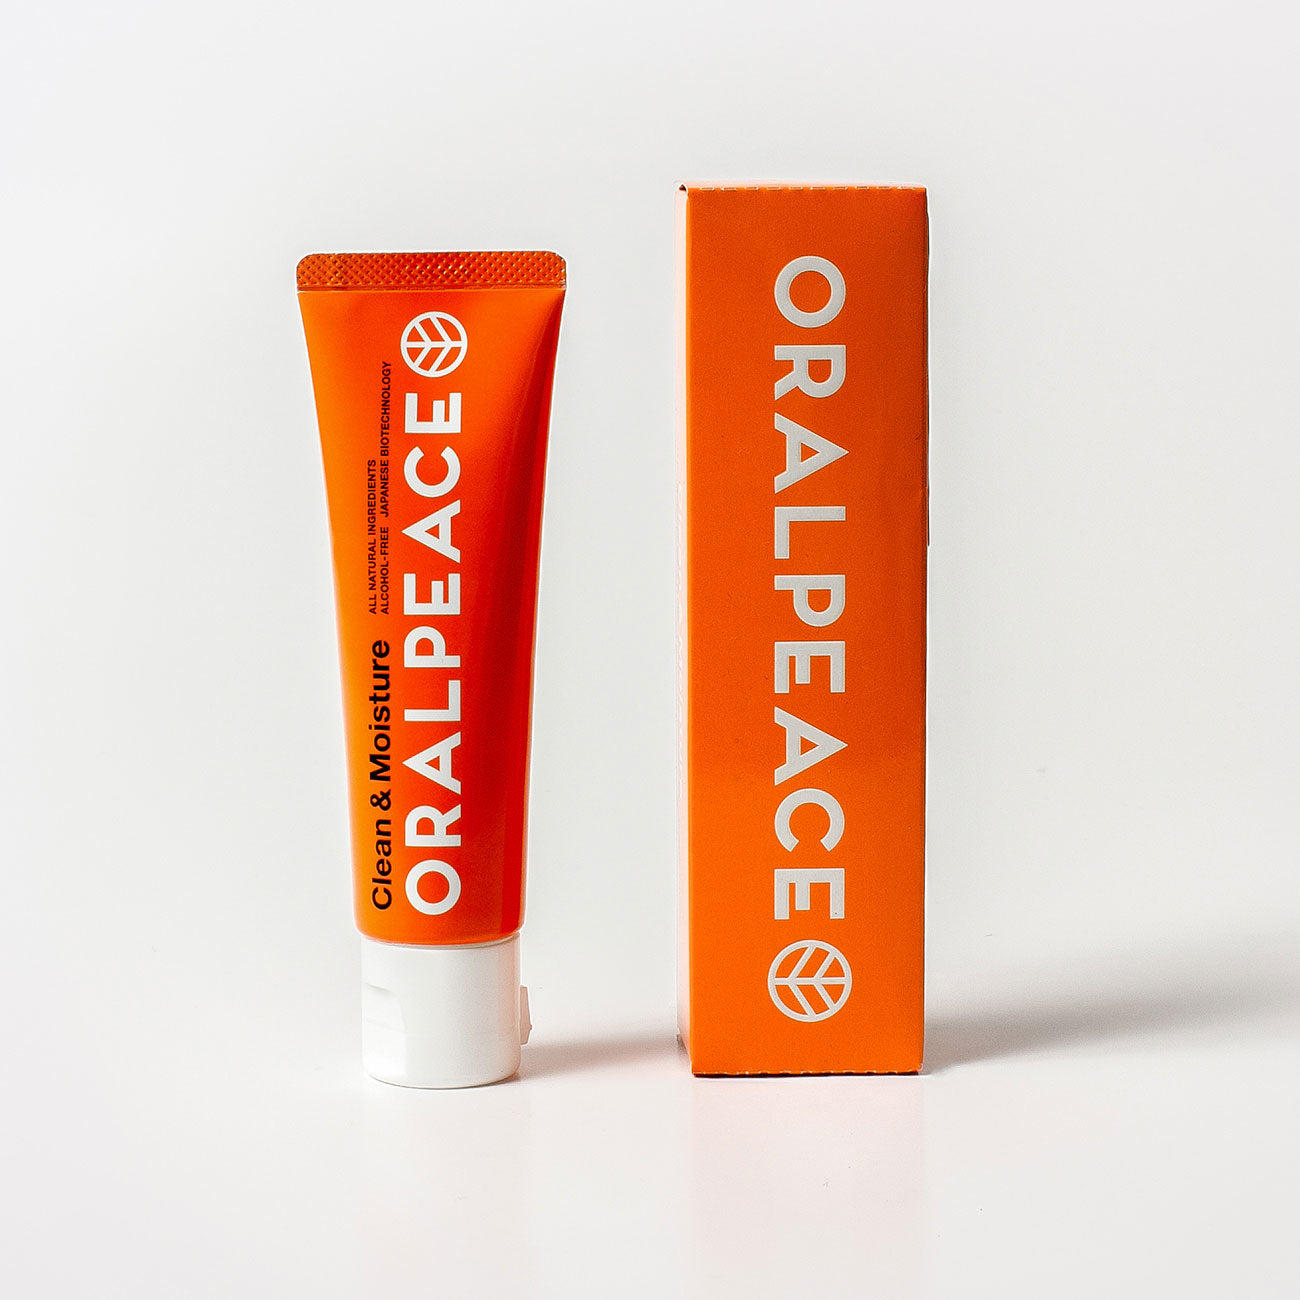 ORALPEACE オーラルピース クリーン&モイスチュア オレンジ 歯みがき口腔ケアジェル 80g